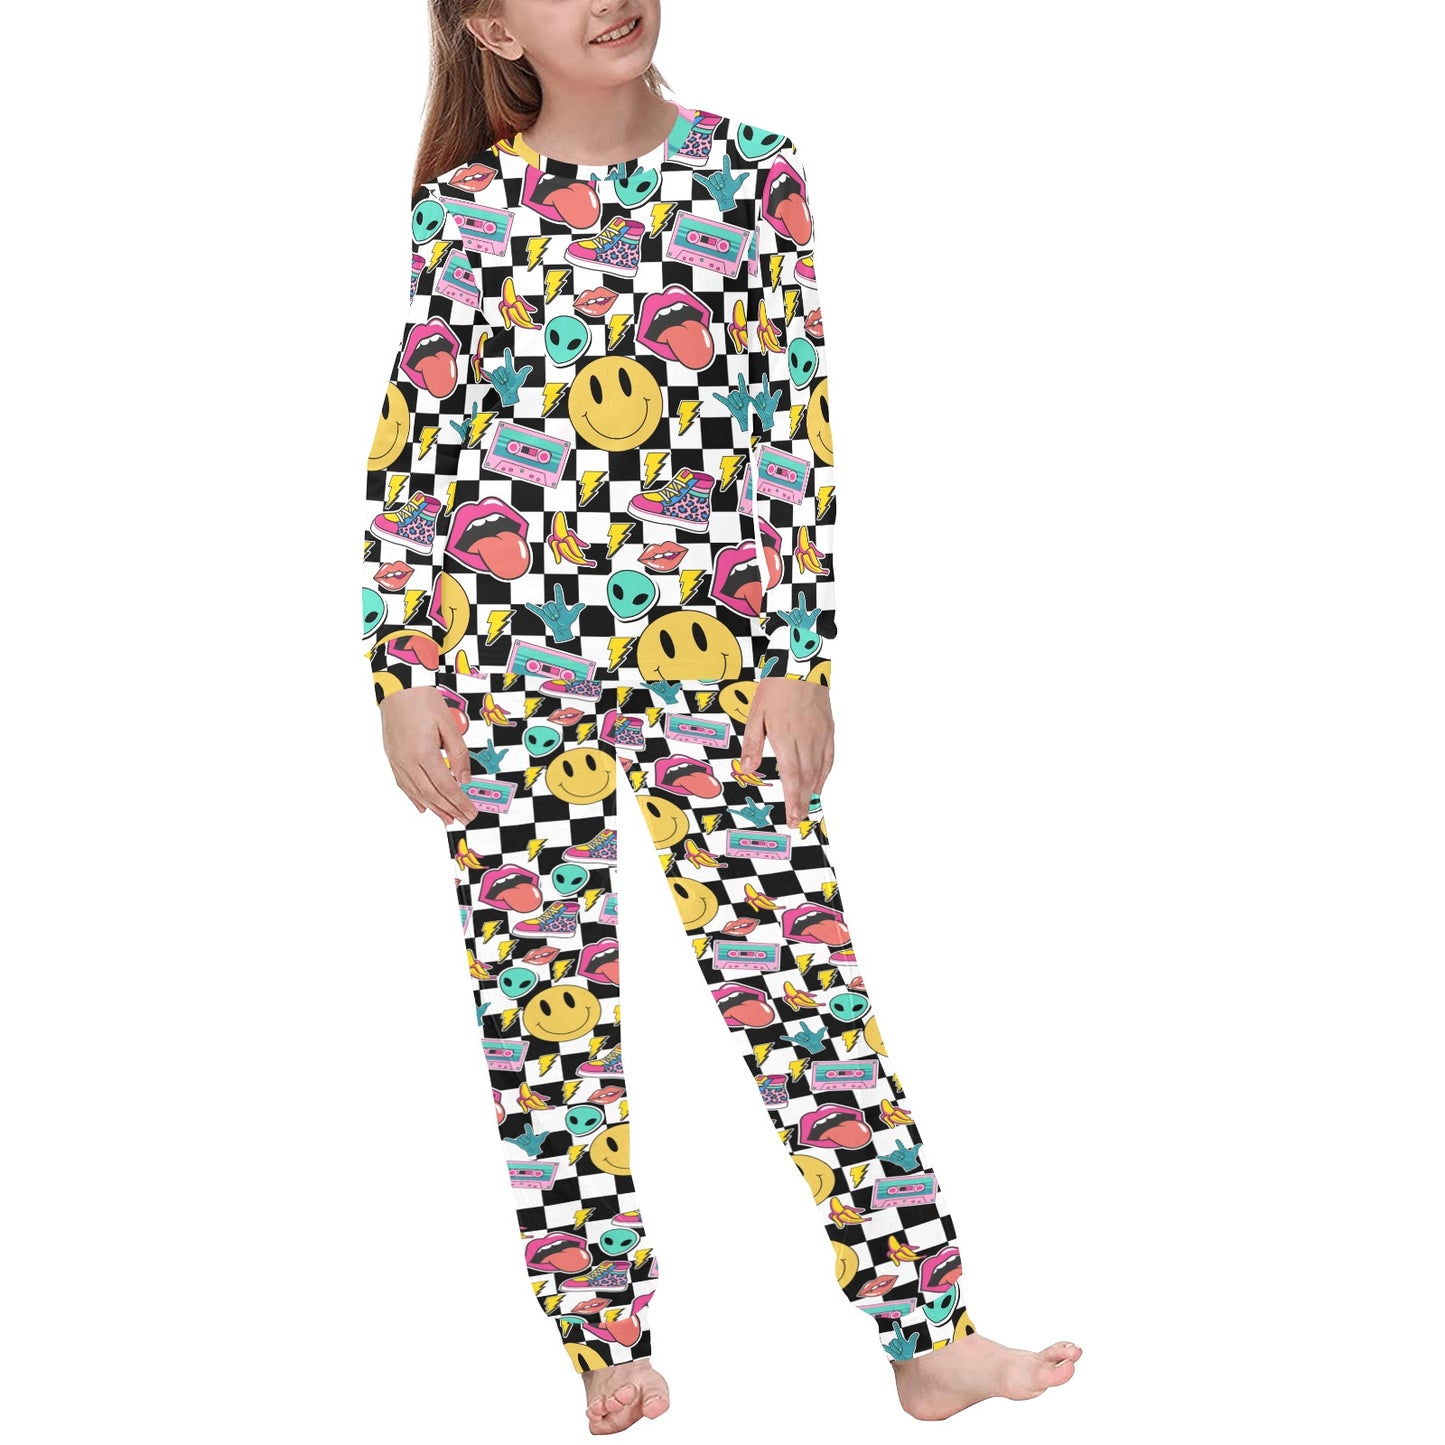 Neon 90s • Kids Pajama Set •Checkered Print •Smiley Faces • School Gift